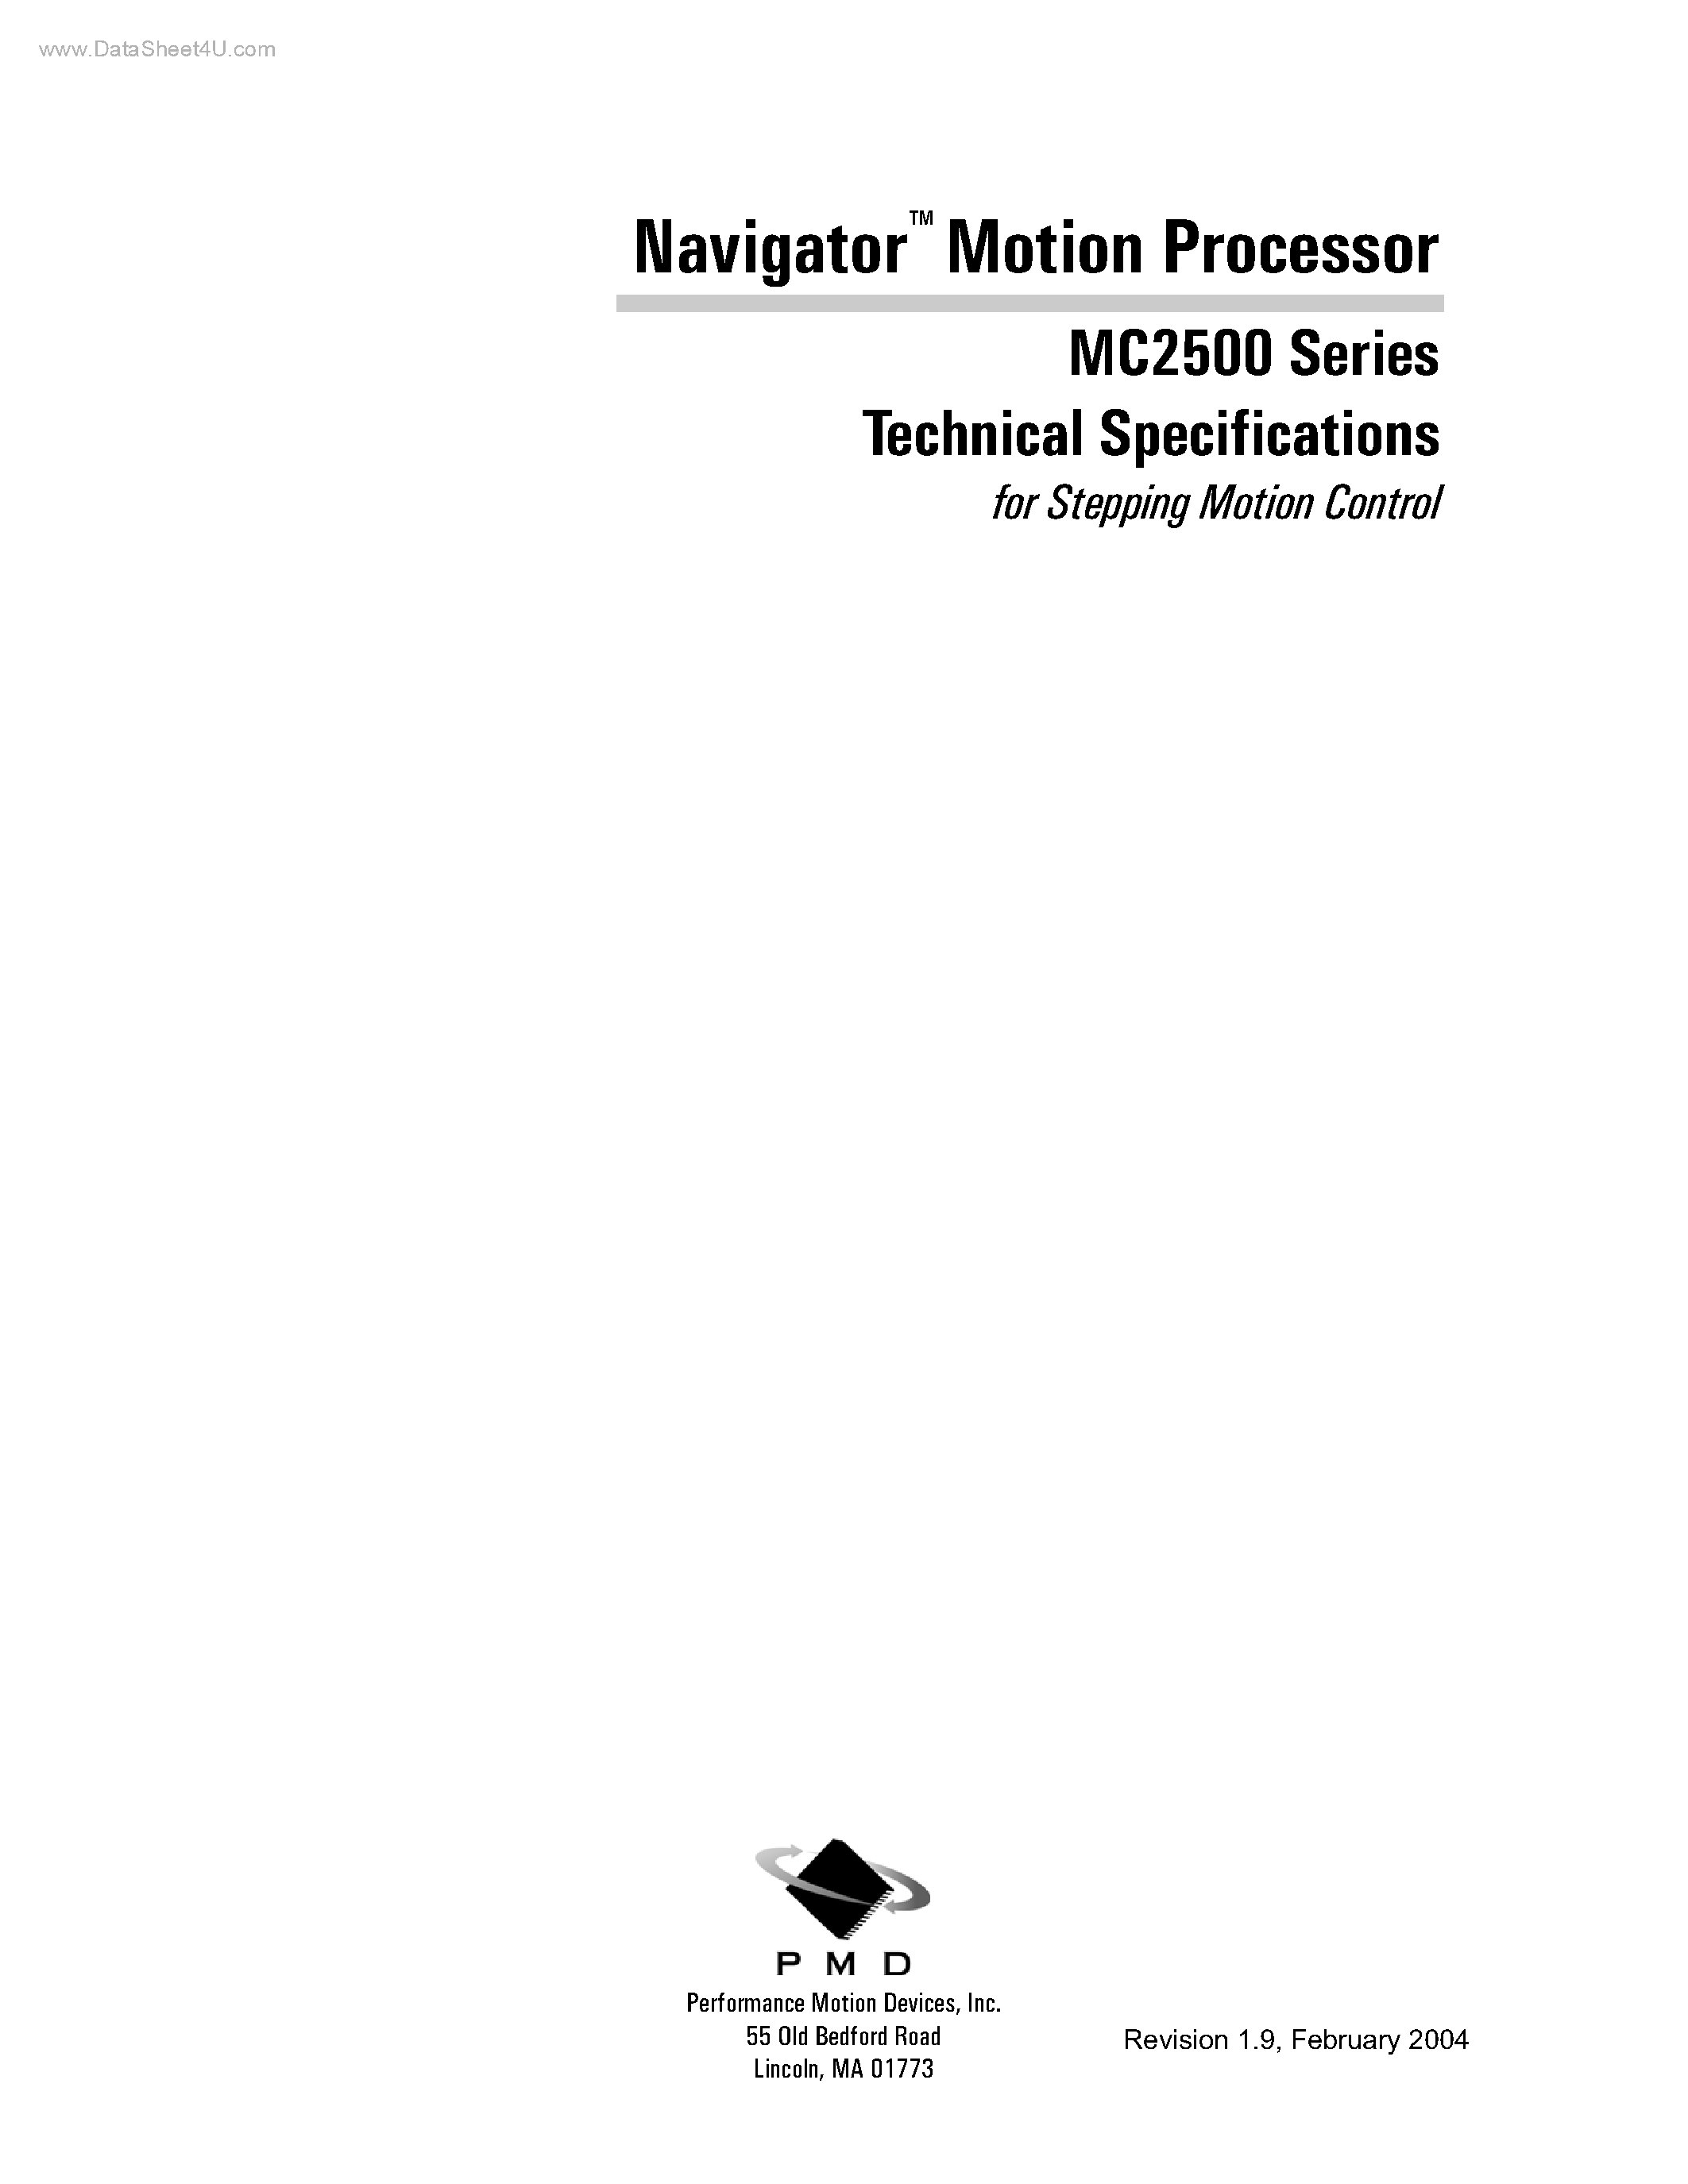 Datasheet MC2500 - Navigator Motion Processor page 1